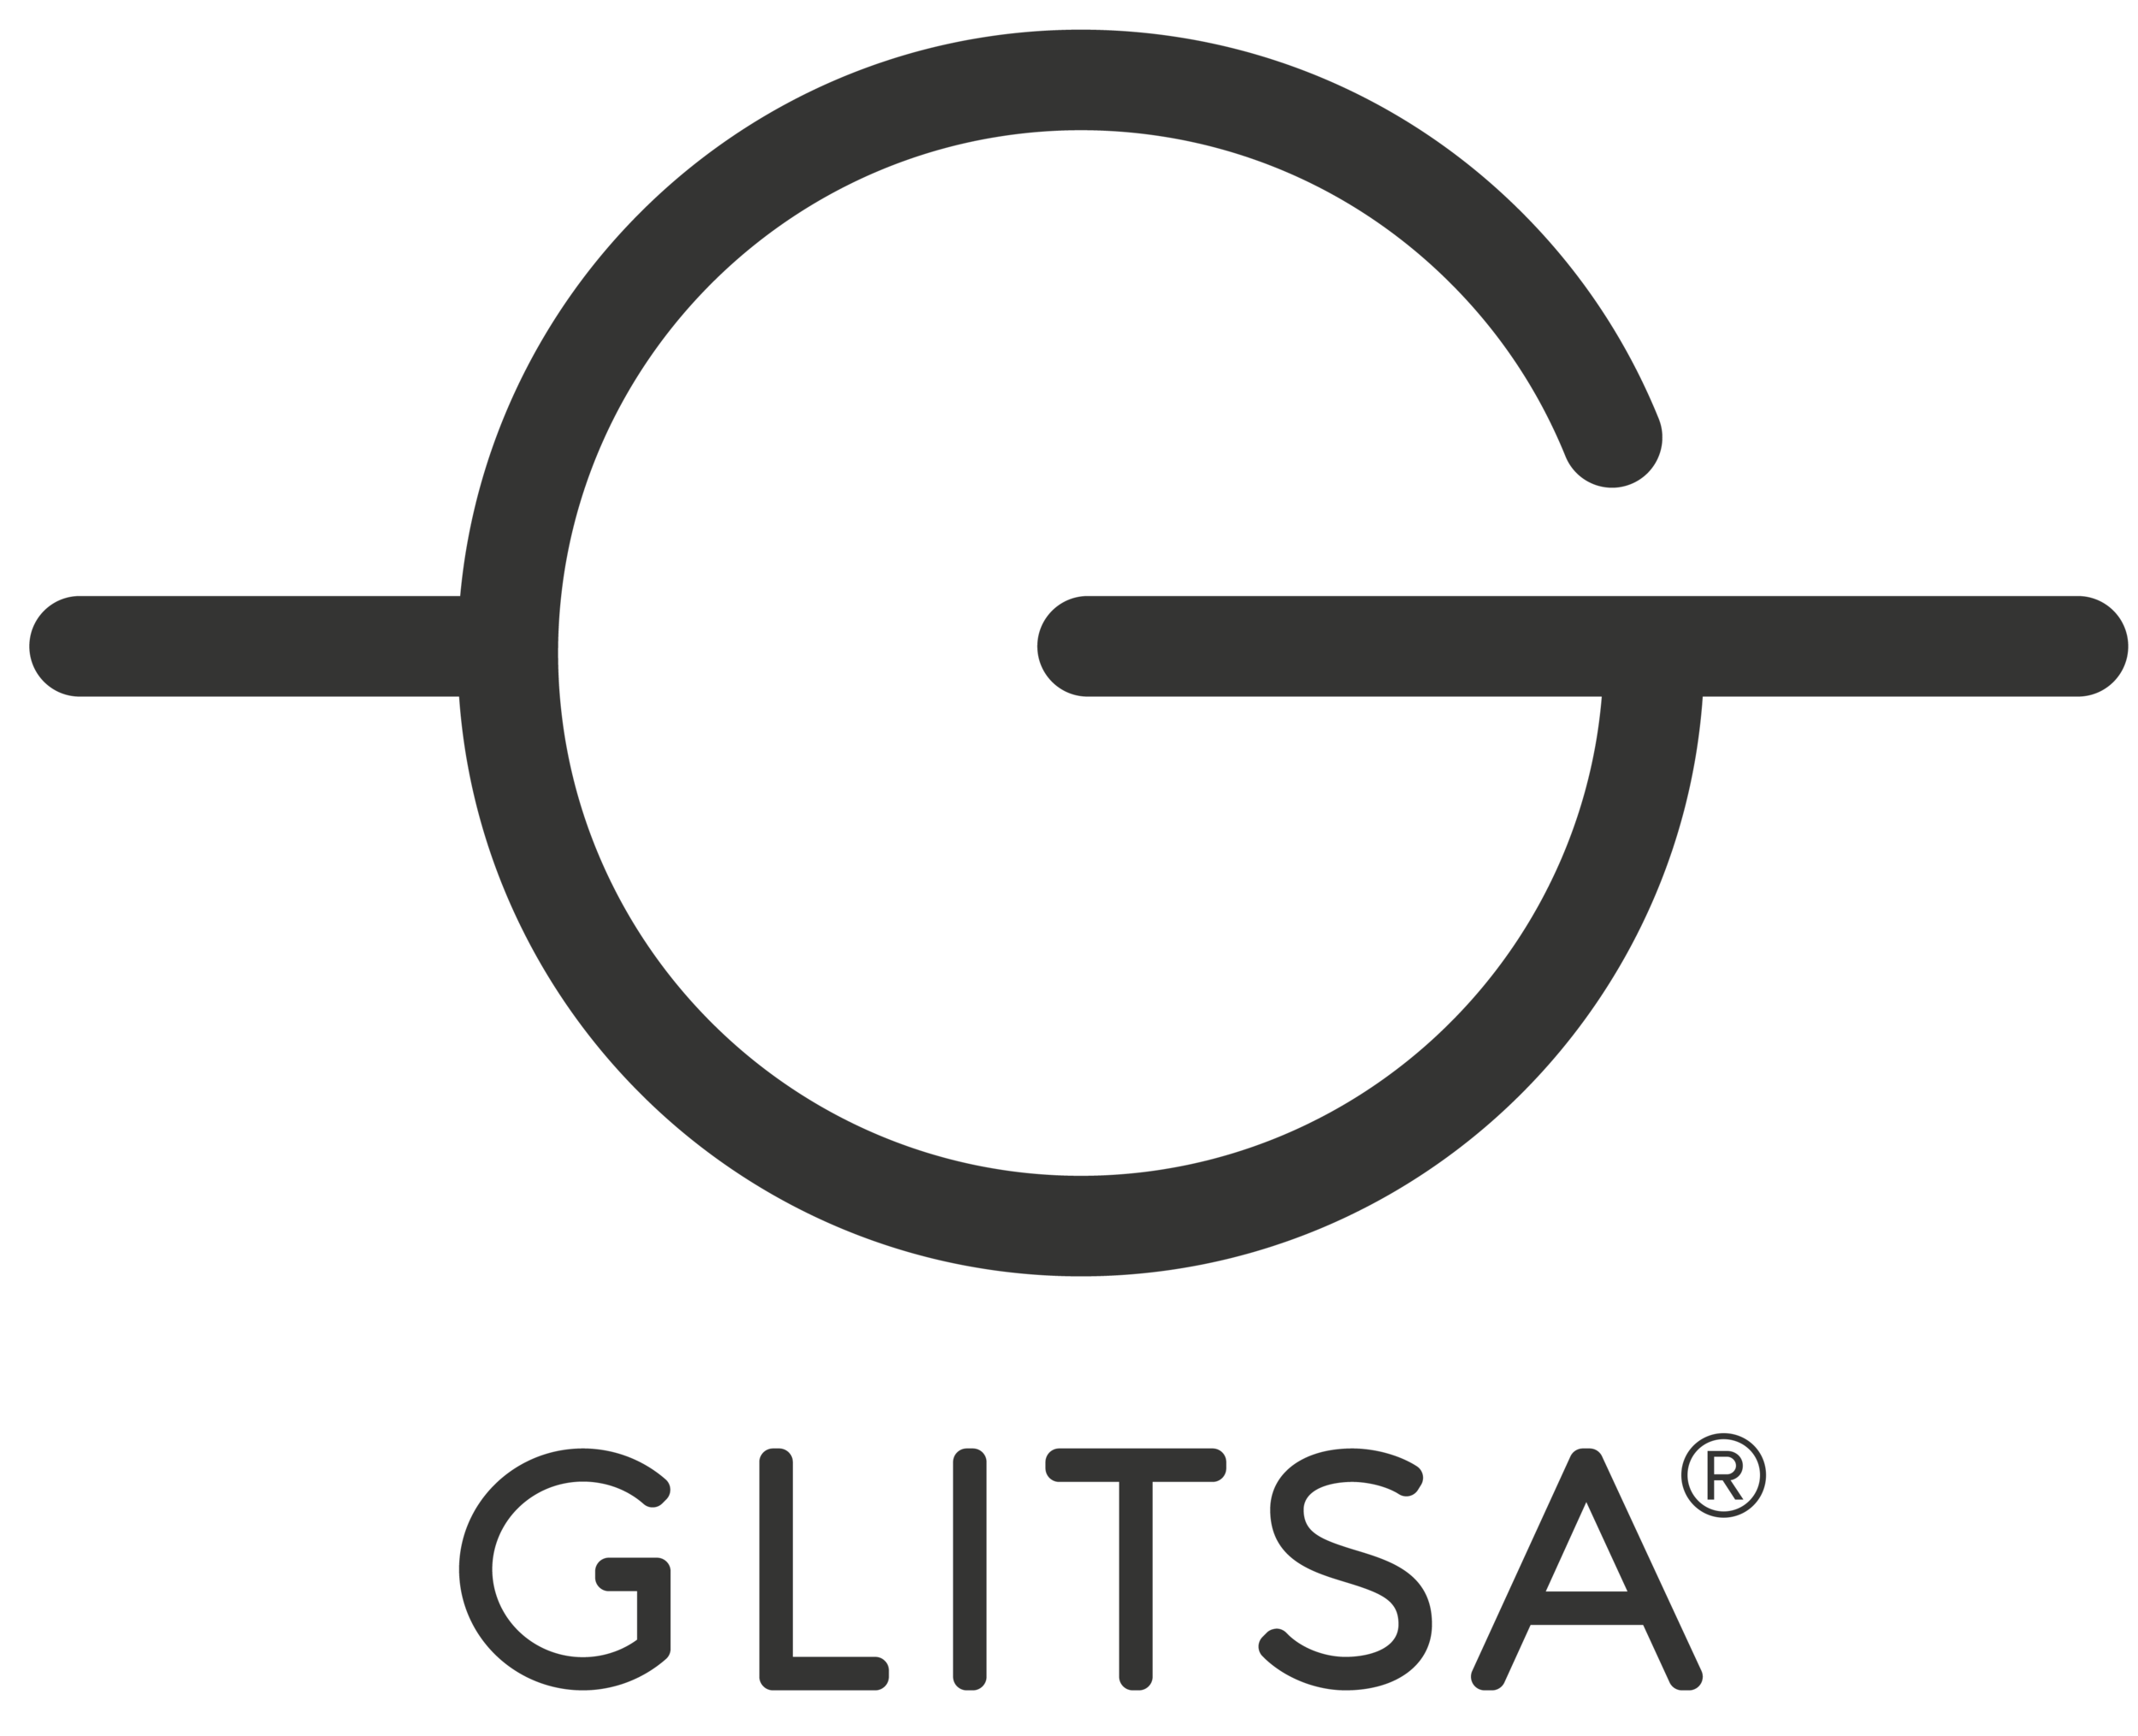 Glitsa-logo High Res.png